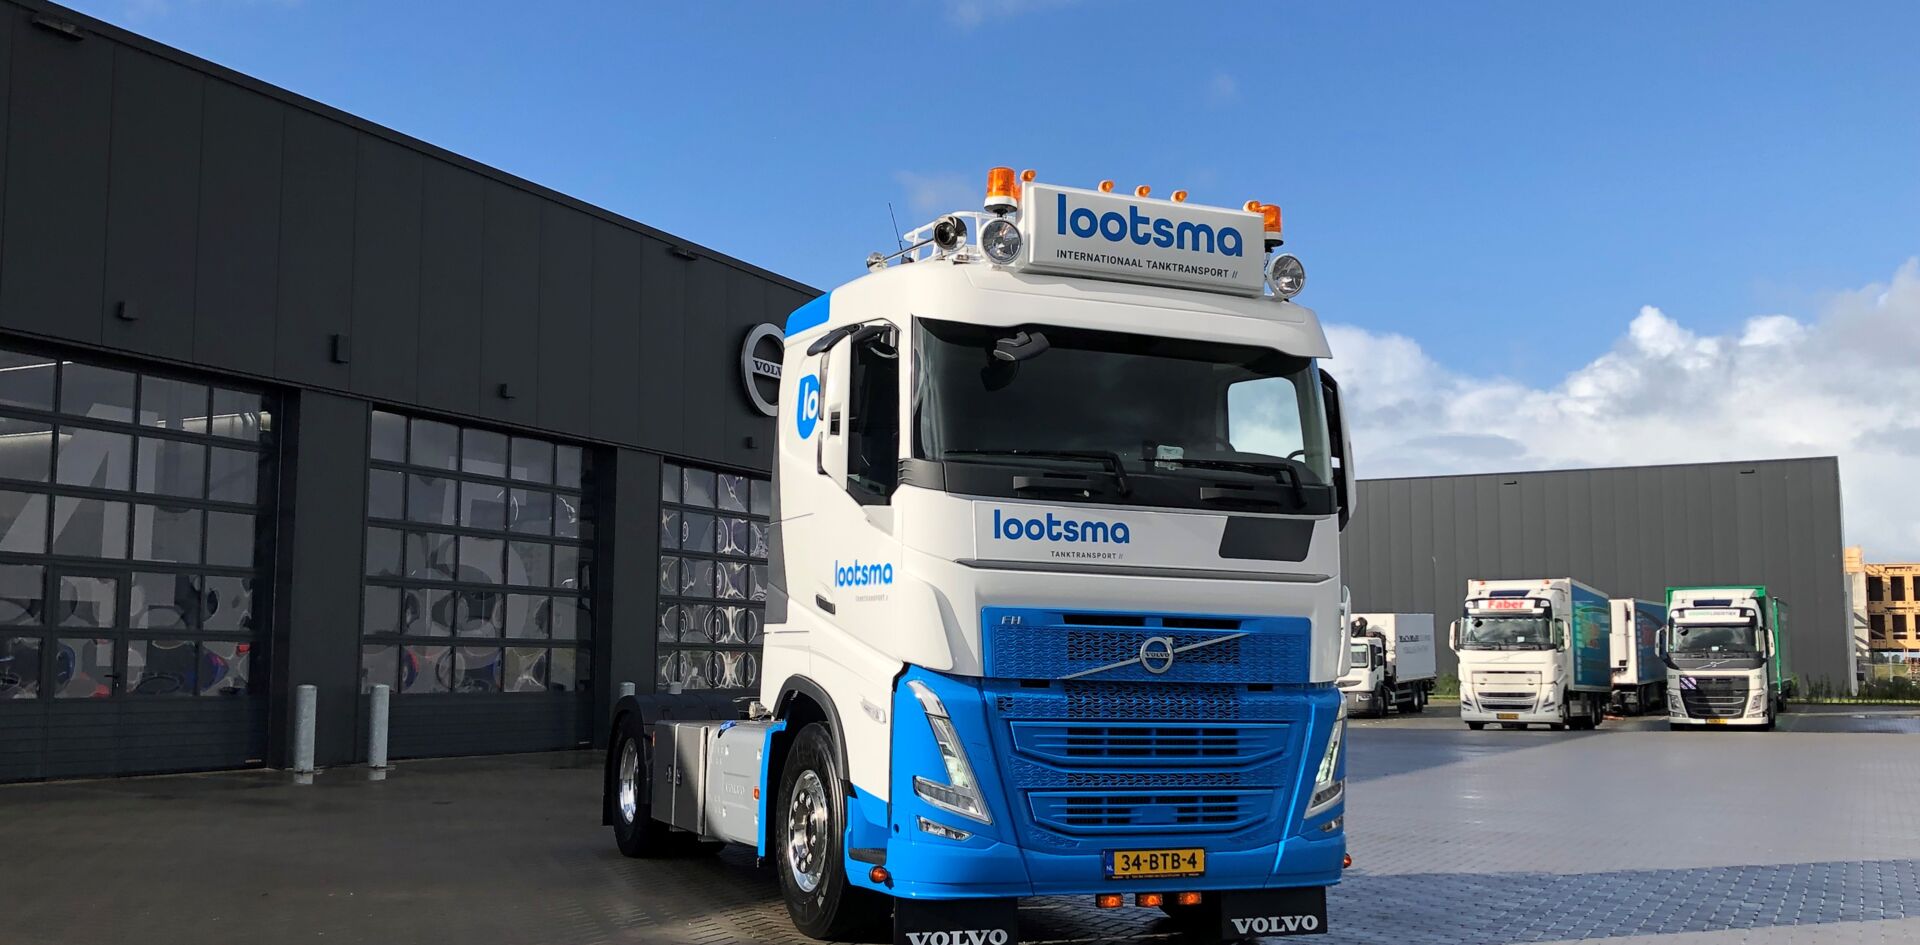 LVS-Trucks_Volvo_Lootsma04